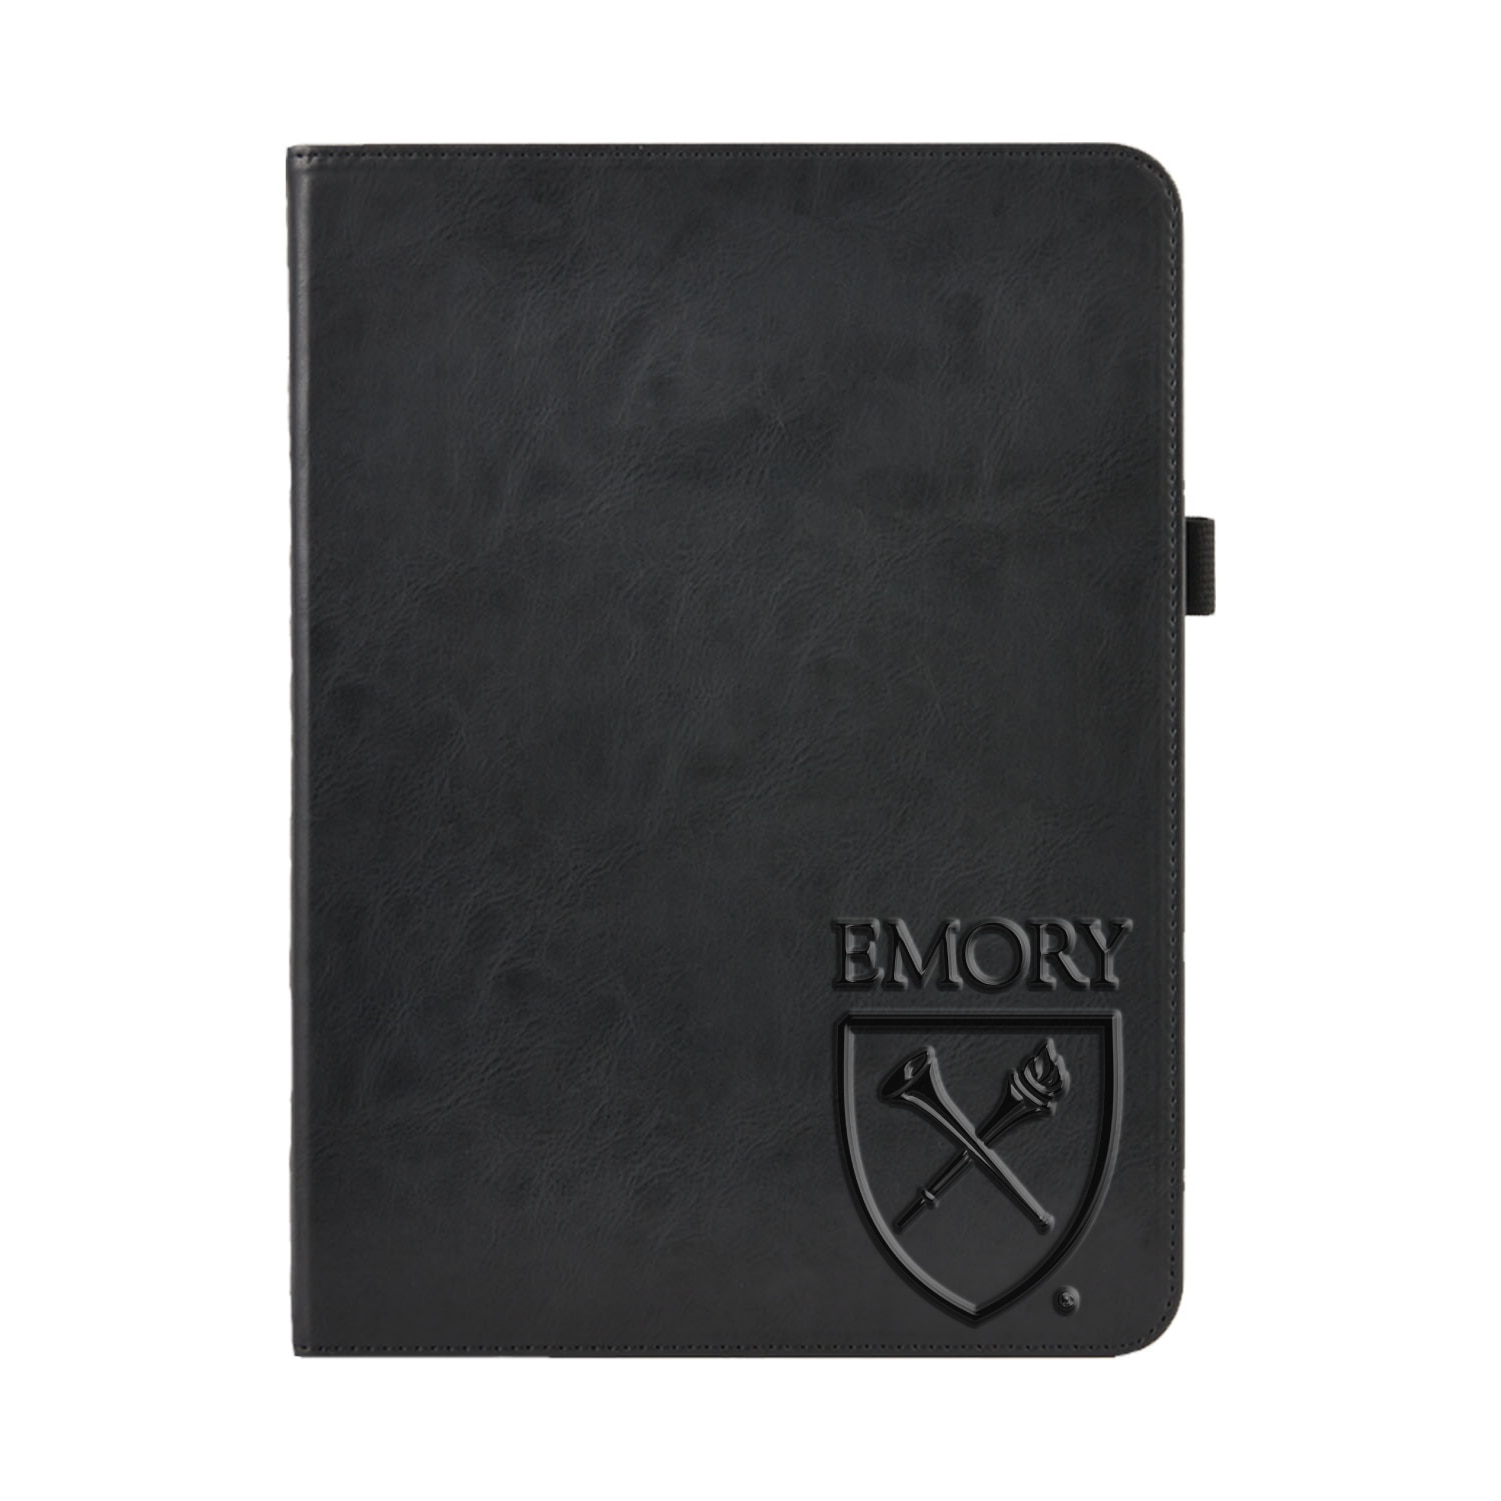 Emory University Black Leather Folio Tablet Case, Alumni V2 - iPad Air (4th gen)